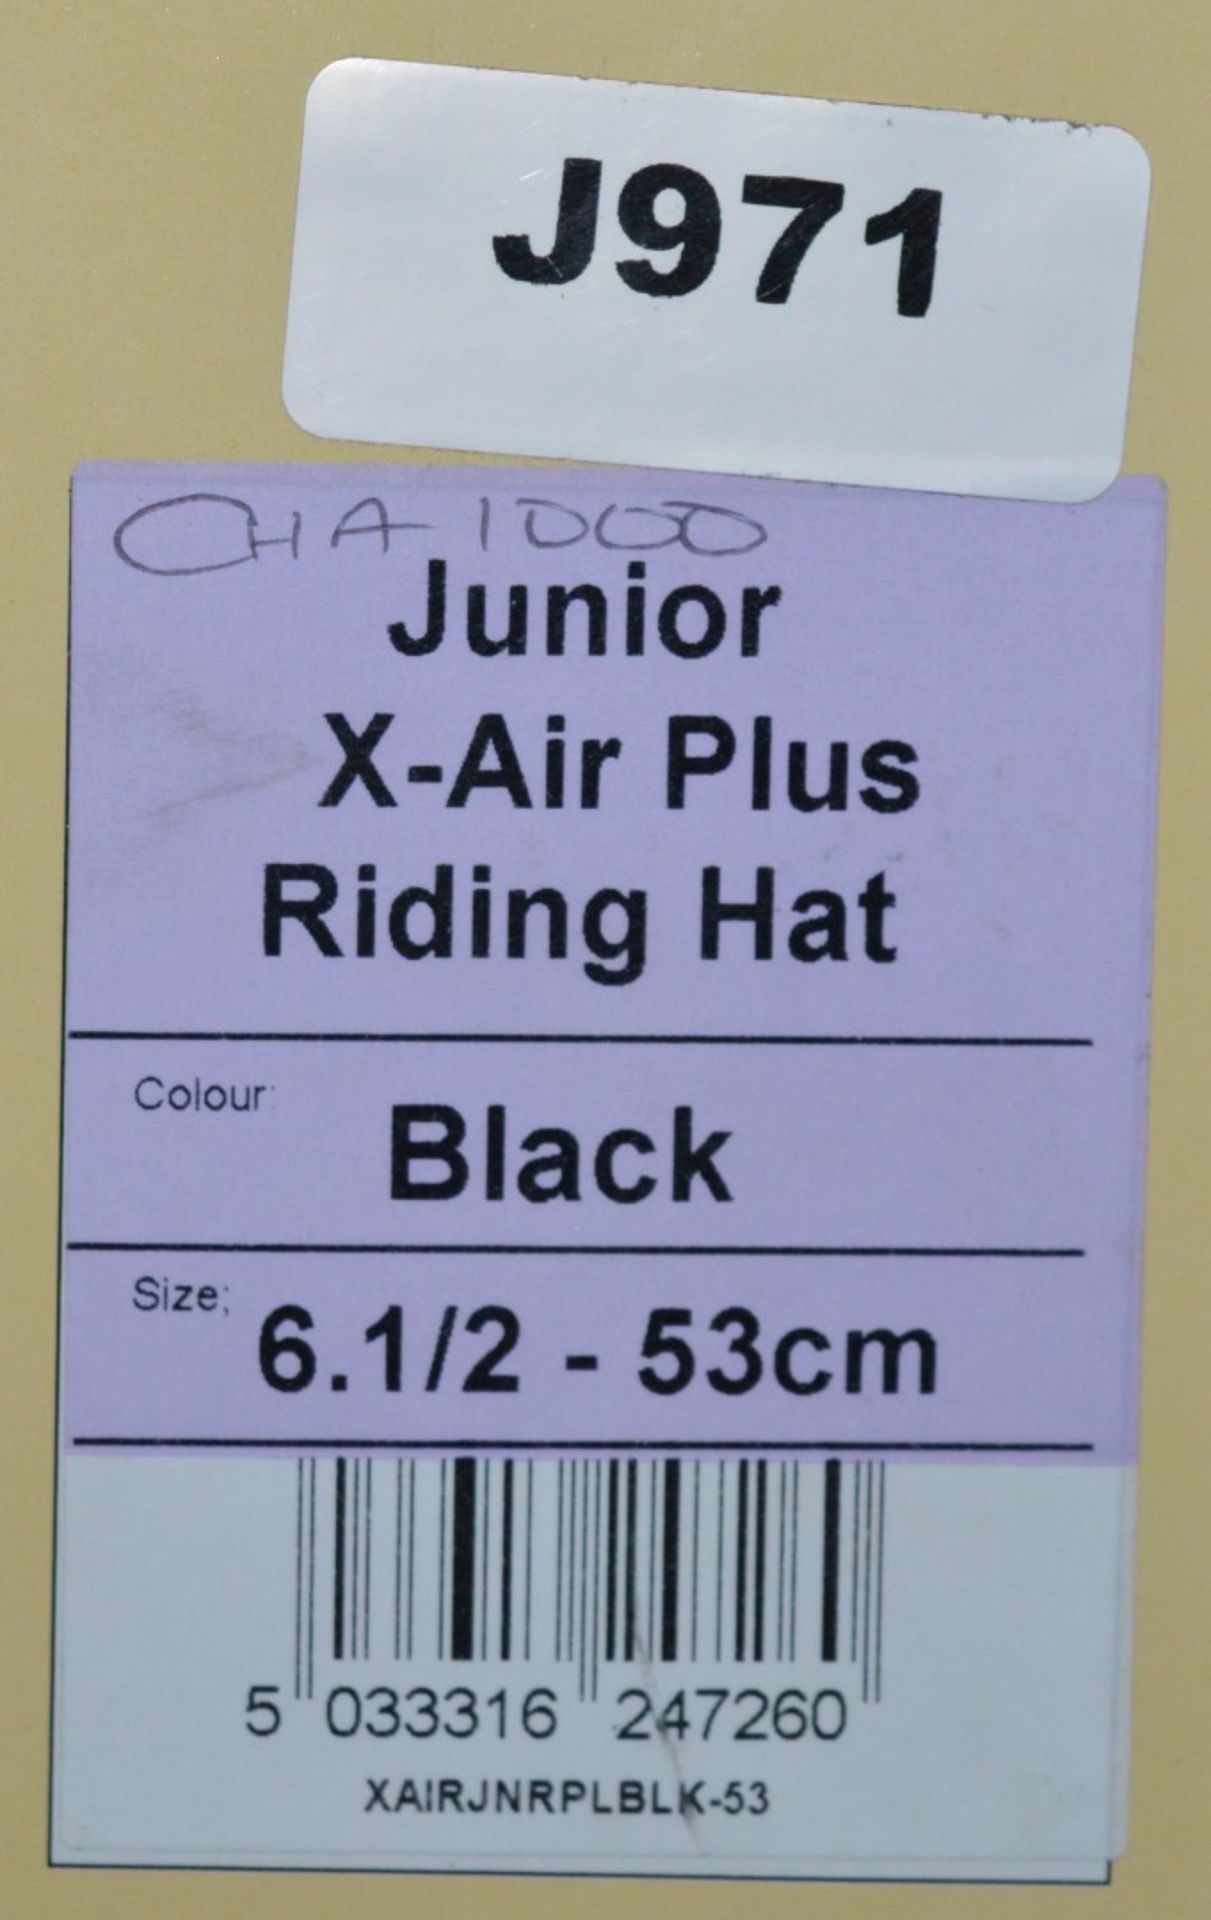 1 x Champion X-Air Junior Horse Riding Helmet in Black - Size 53cm - Ref J971 - CL401 - Ref J971 - - Image 5 of 5